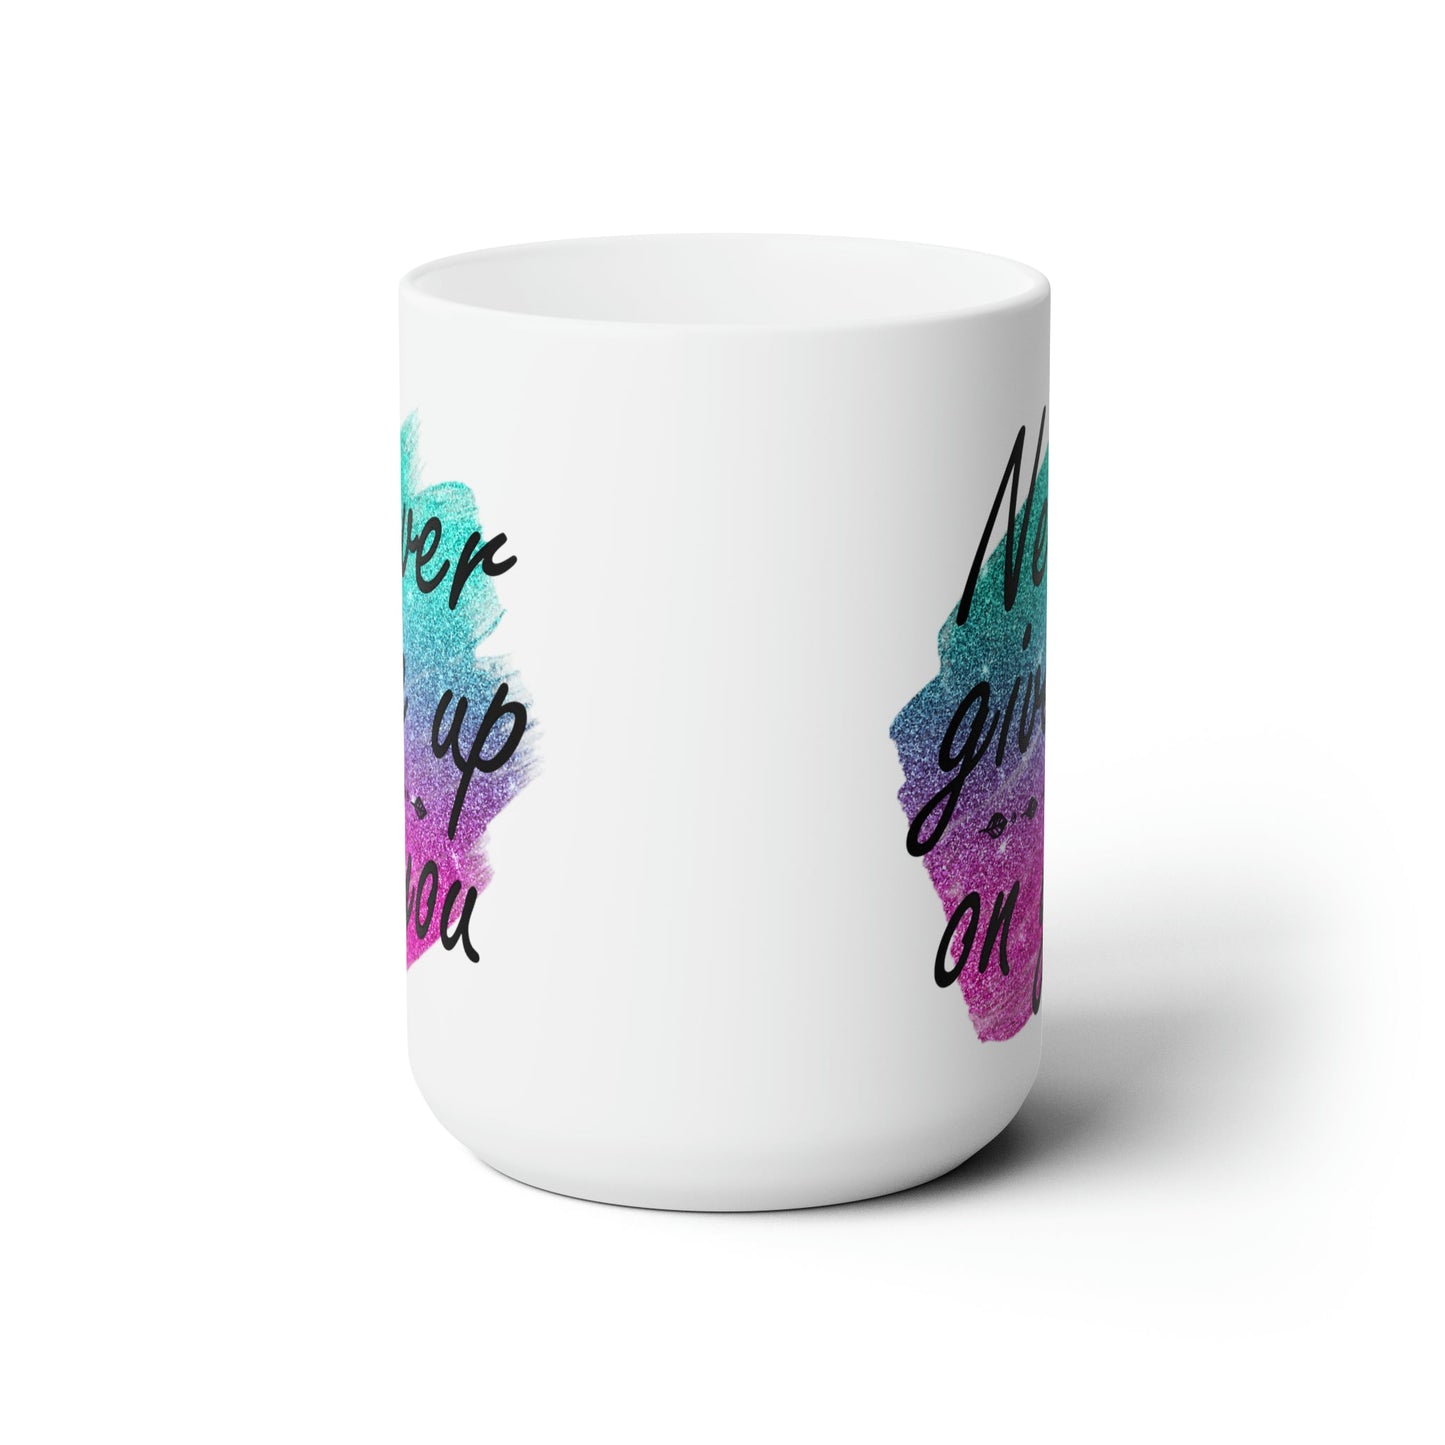 Never Give Up 15 oz. Ceramic Mug - White